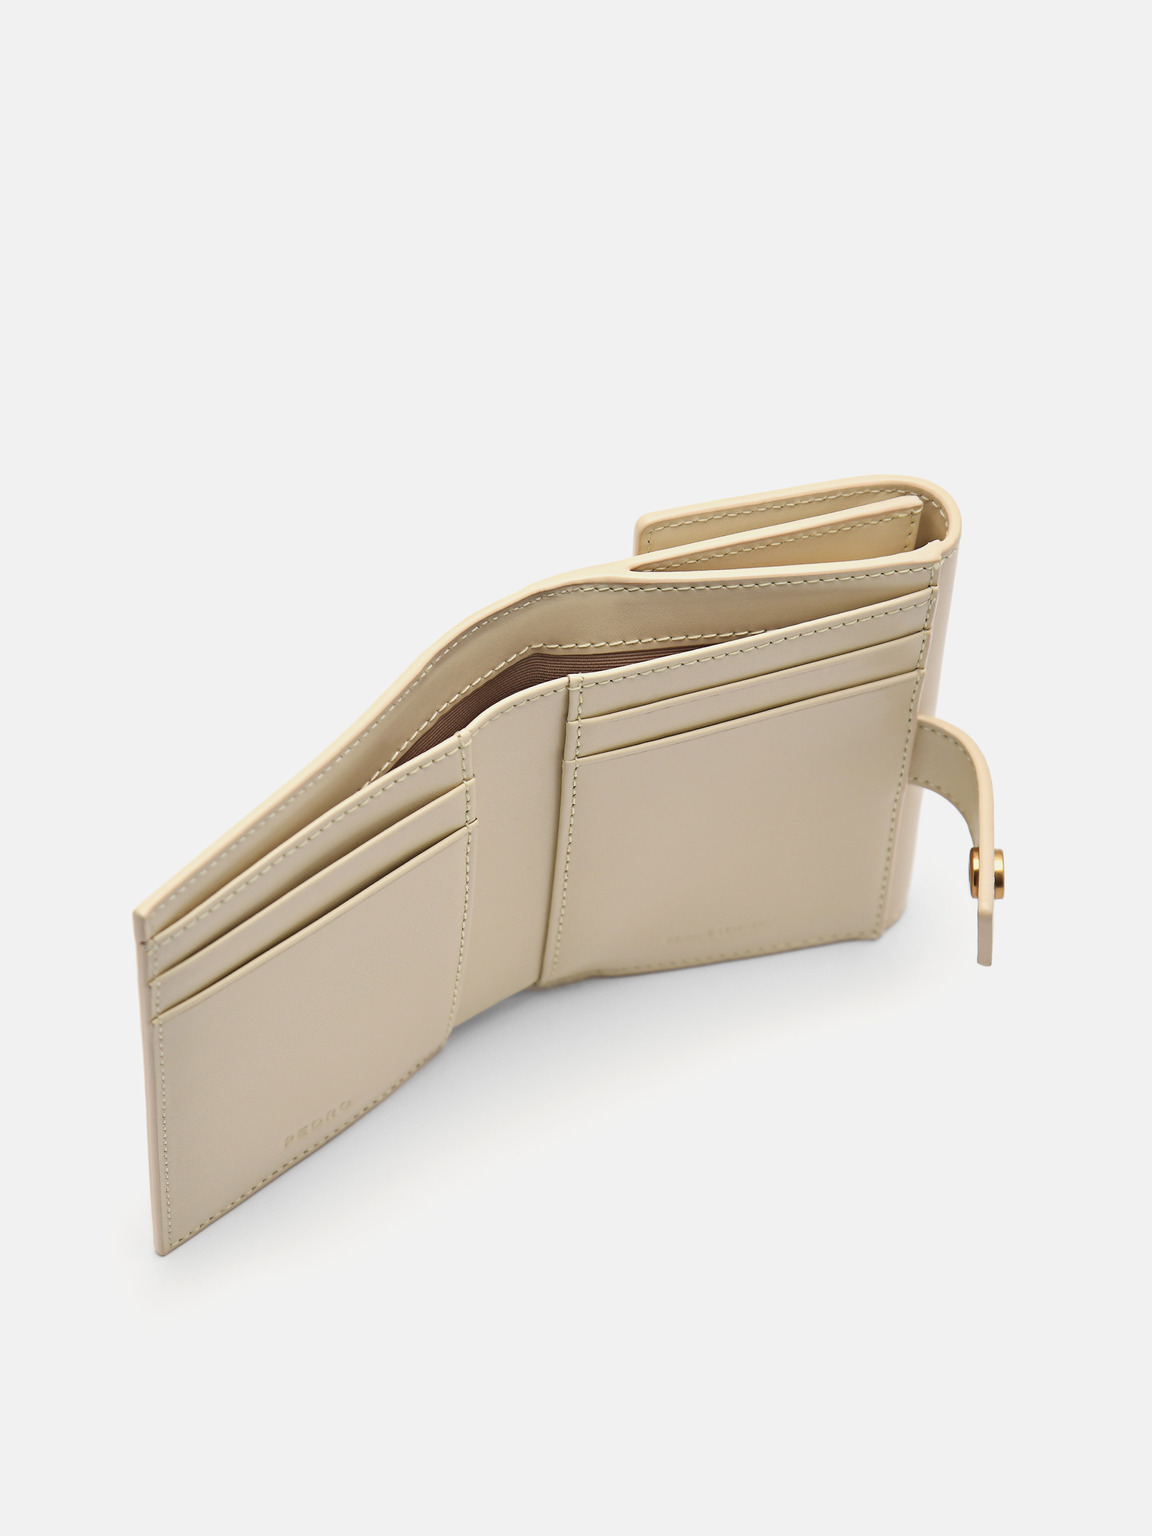 PEDRO Studio Leather Tri-Fold Wallet, Sand